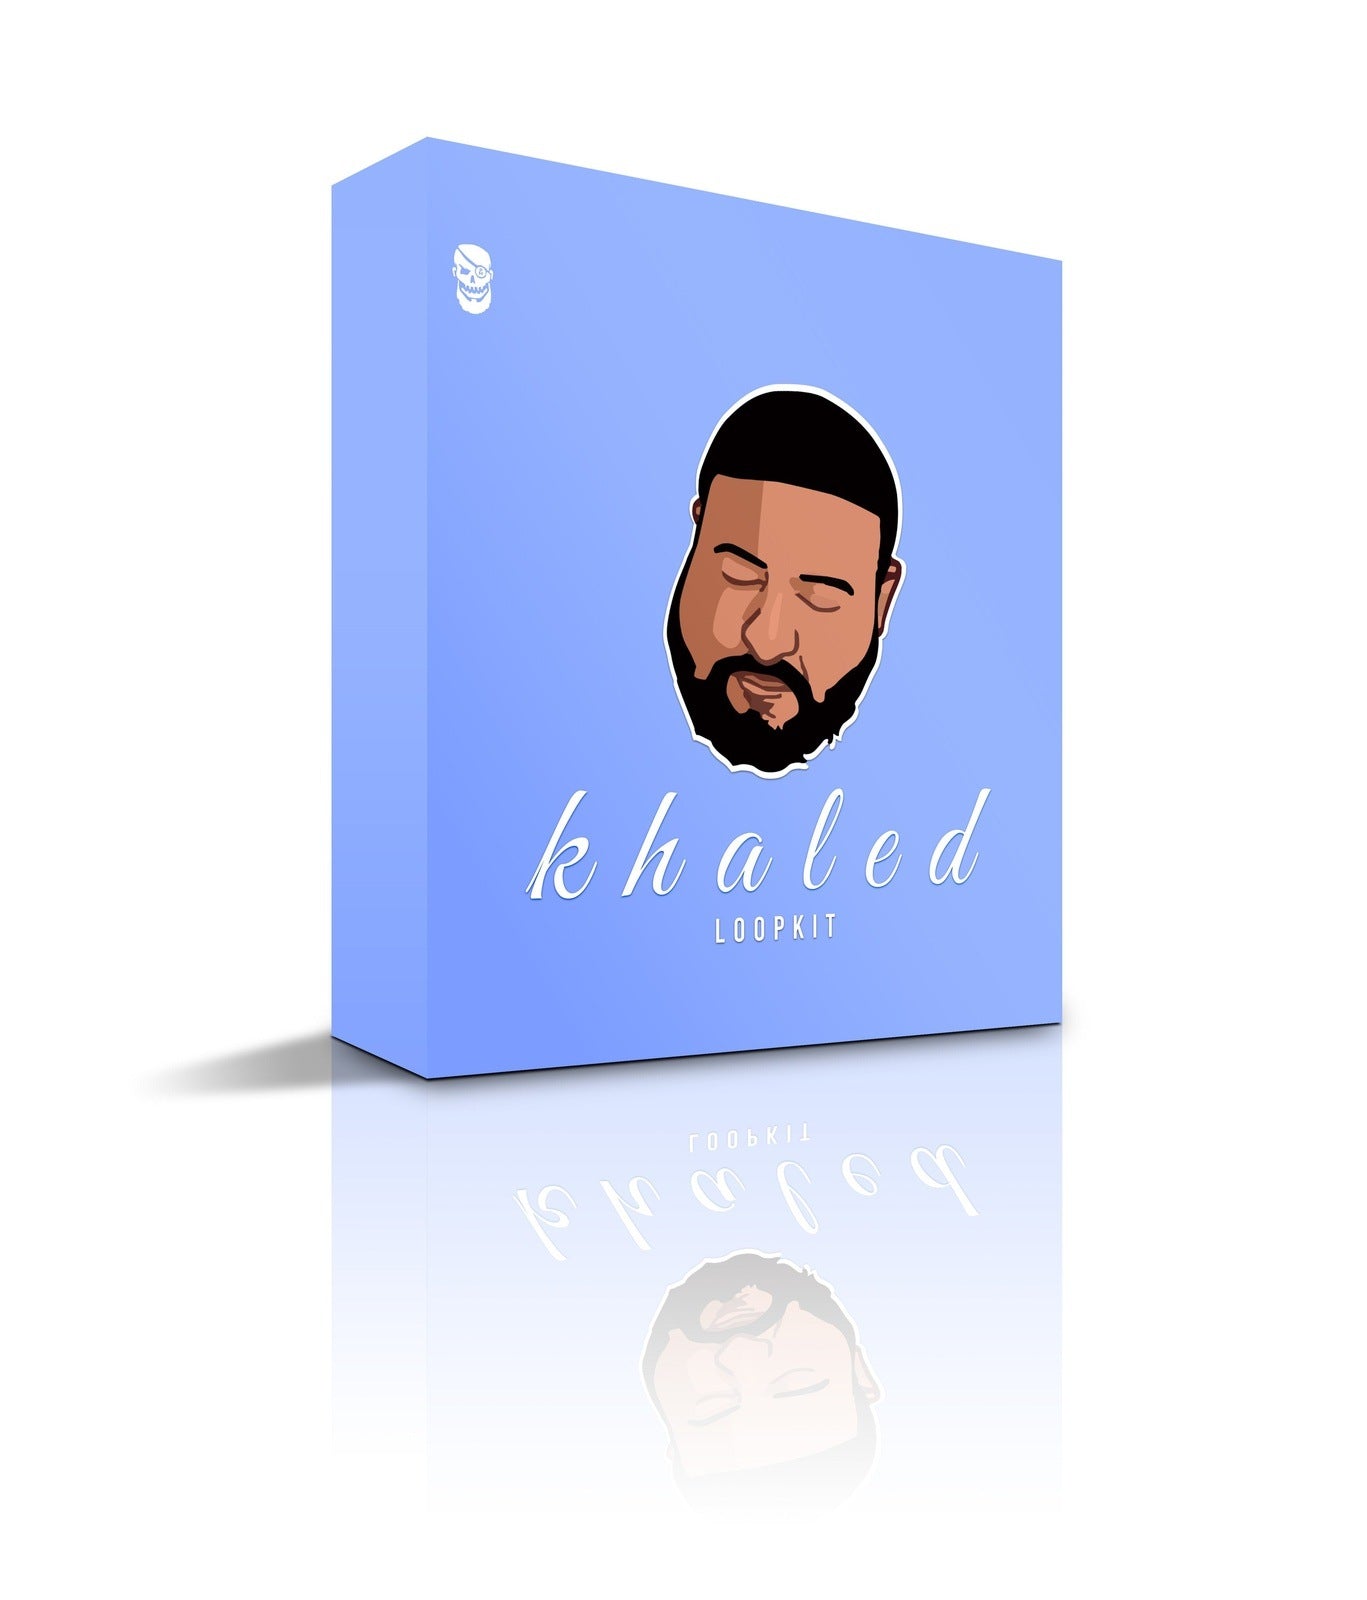 Khaled